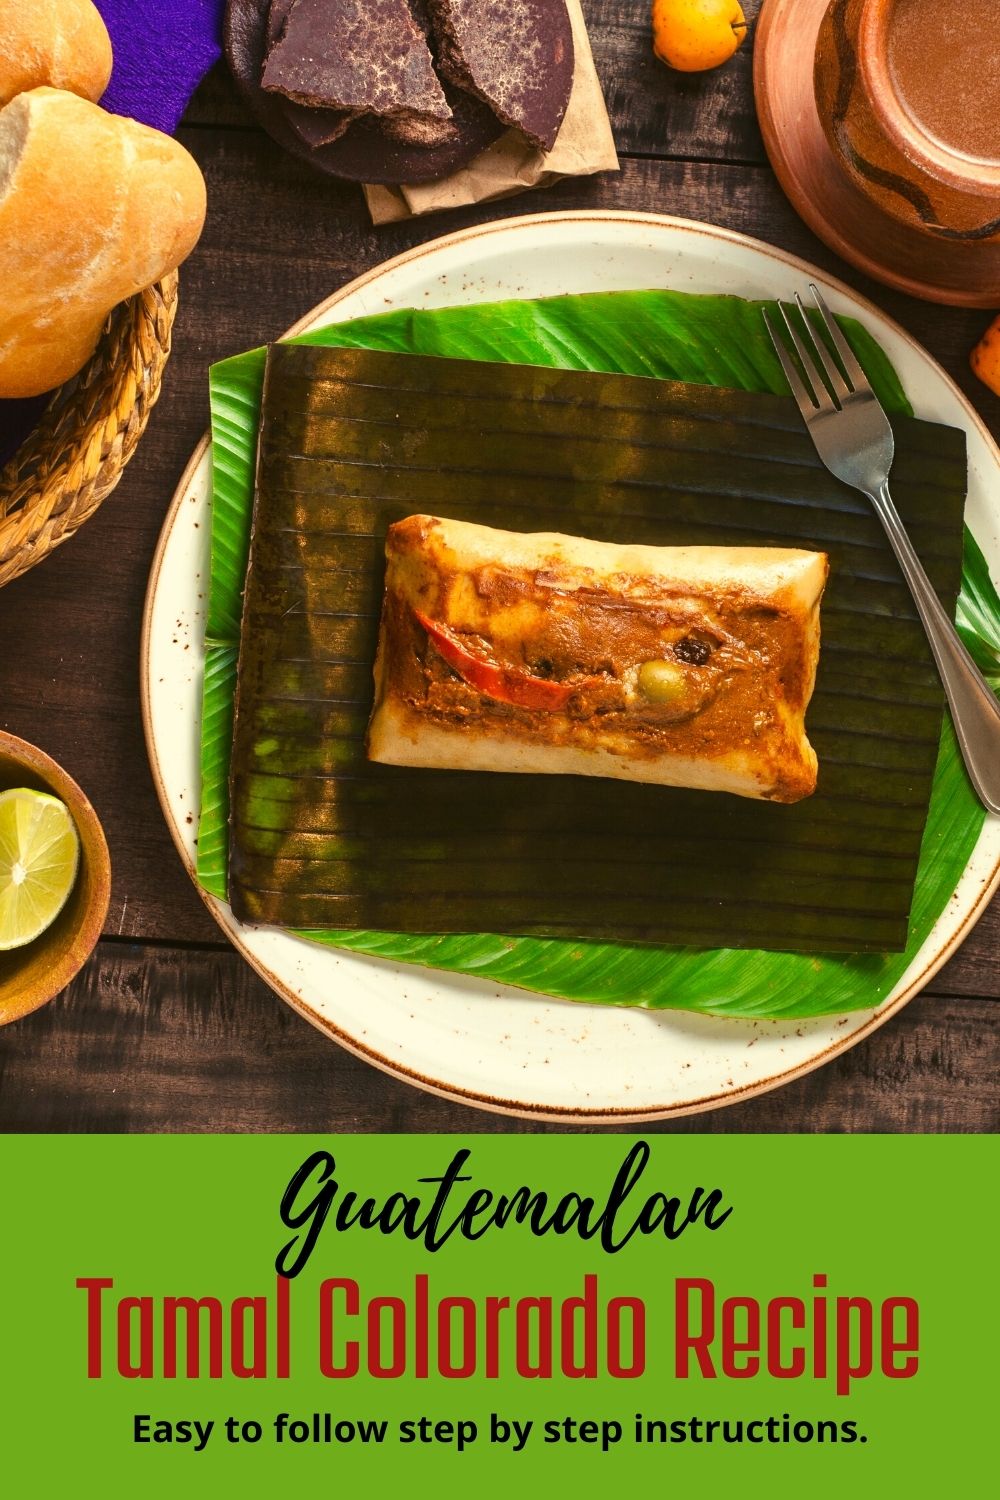 Guatemalan tamal colorado recipe